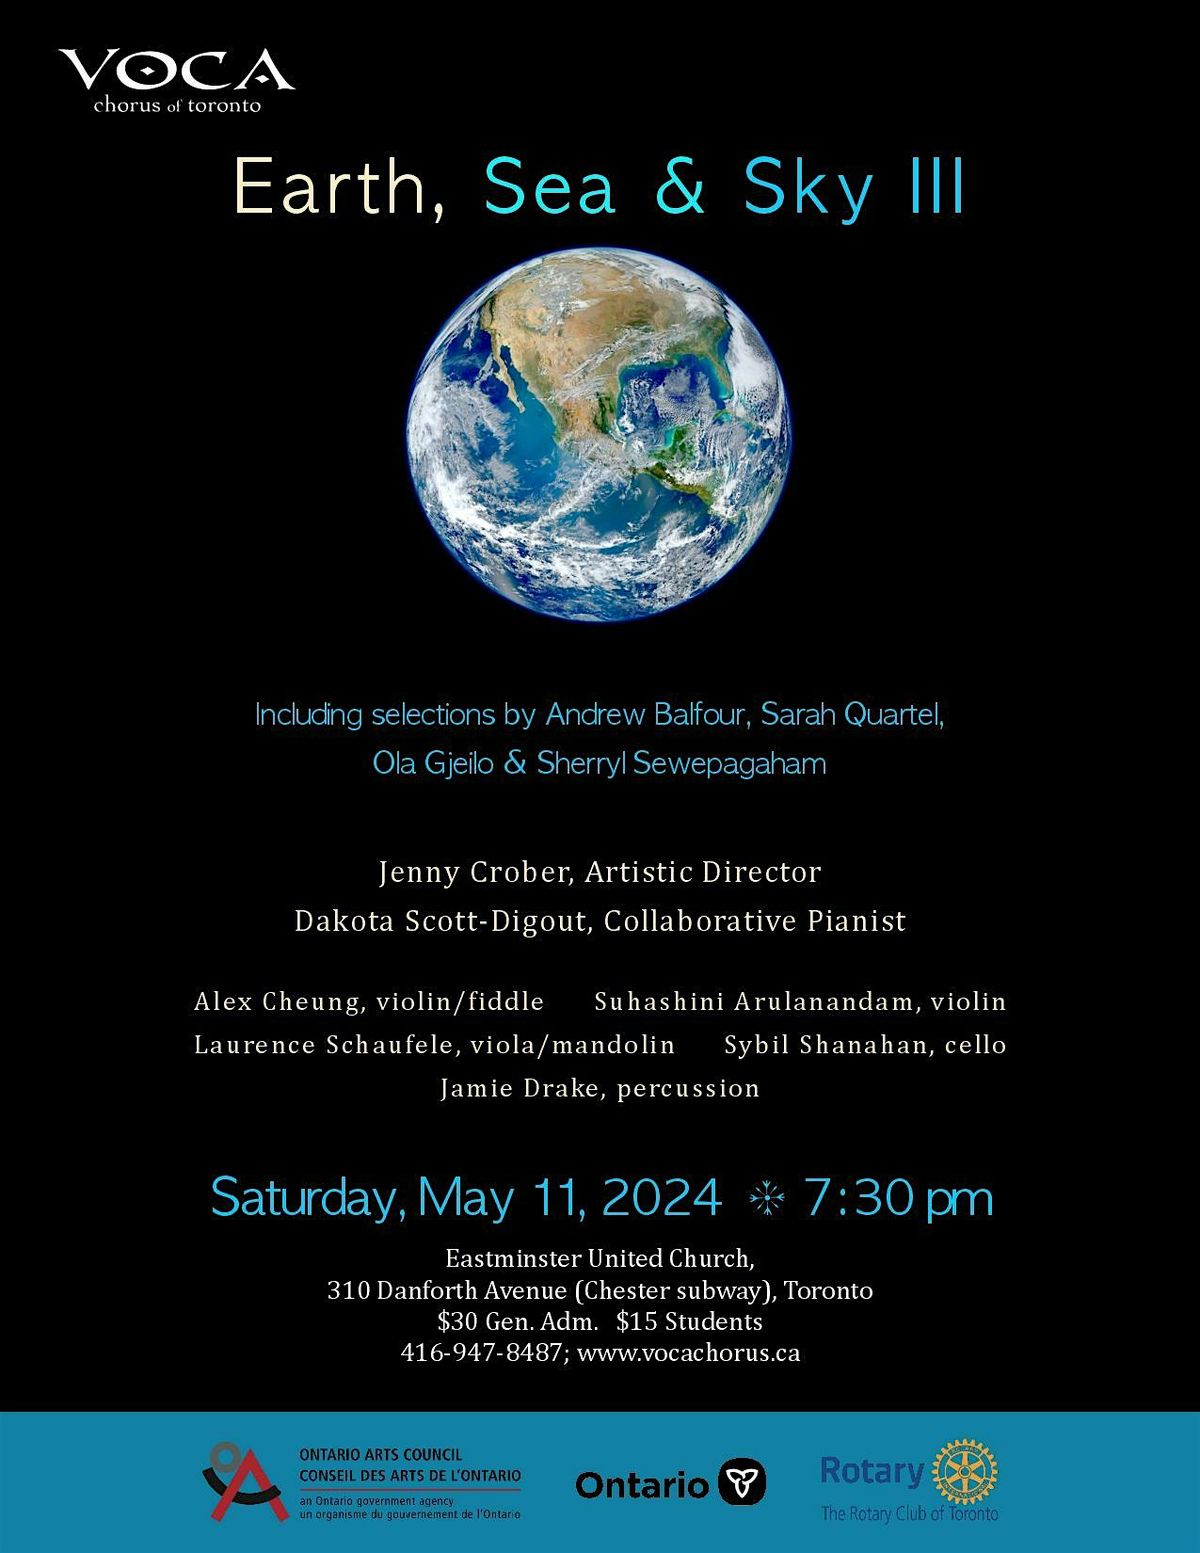 VOCA Chorus of Toronto: "Earth, Sea & Sky III": Sat., May 11, 2024